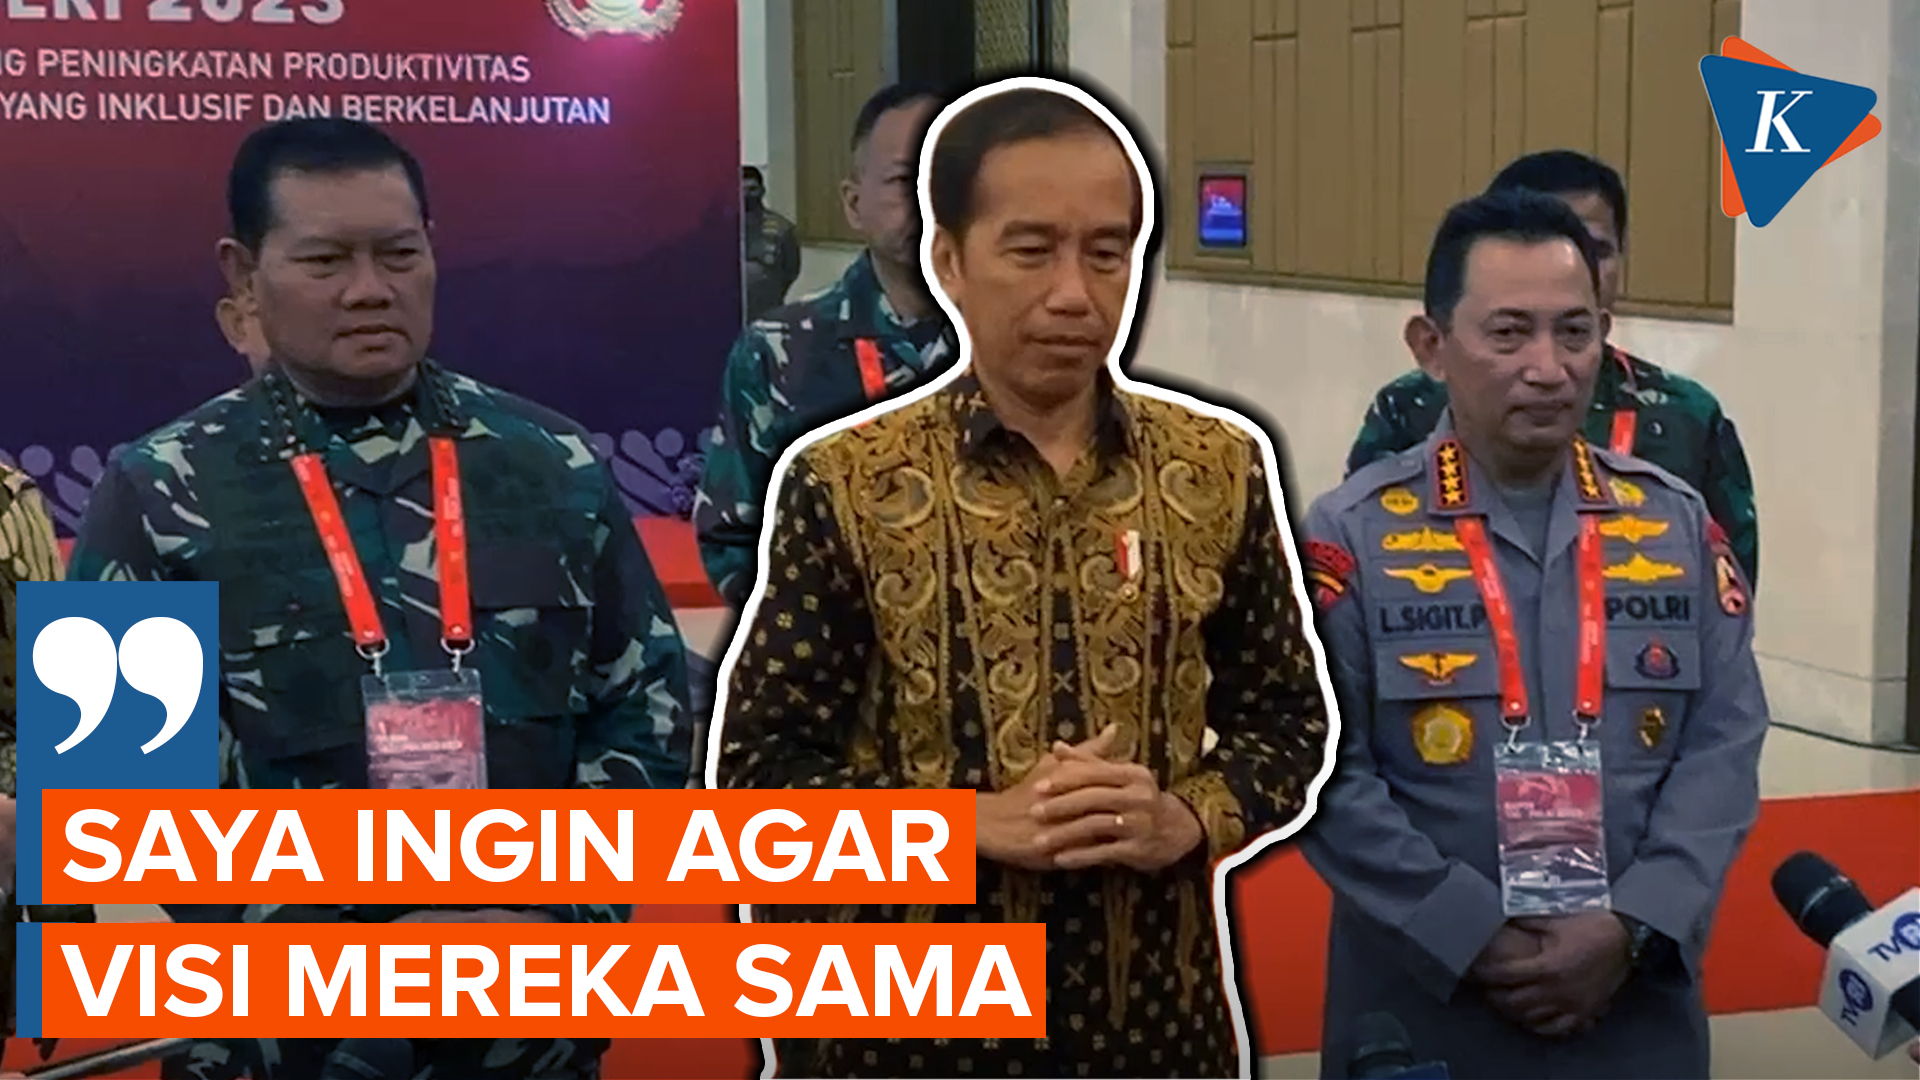 Jokowi Tugaskan TNI-Polri Jaga Industrialisasi, Berantas Praktik Tambang dan Ekspor Ilegal